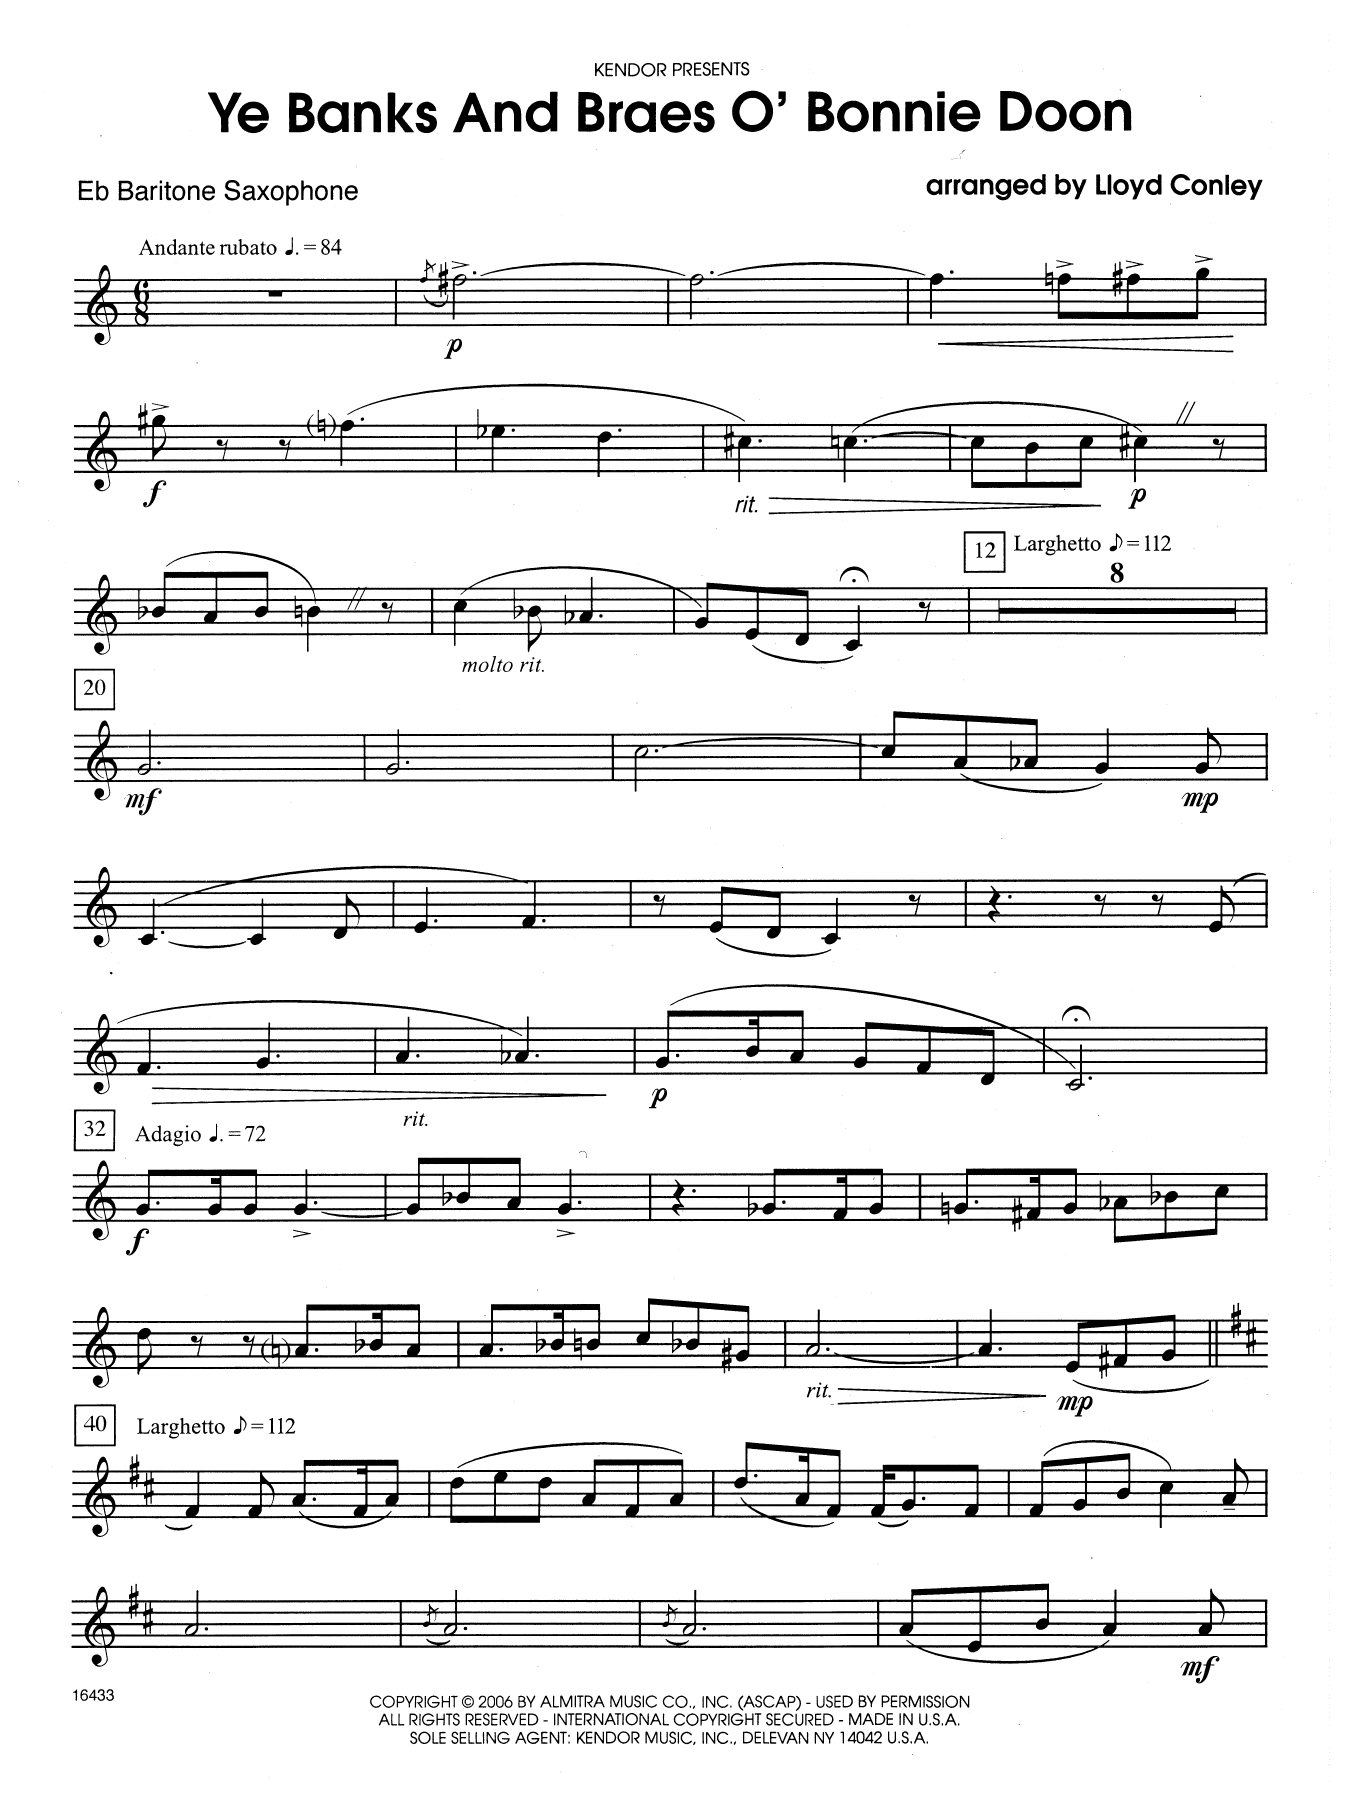 Lloyd Conley Ye Banks and Braes o' Bonnie Doon - Eb Baritone Saxophone sheet music notes and chords. Download Printable PDF.